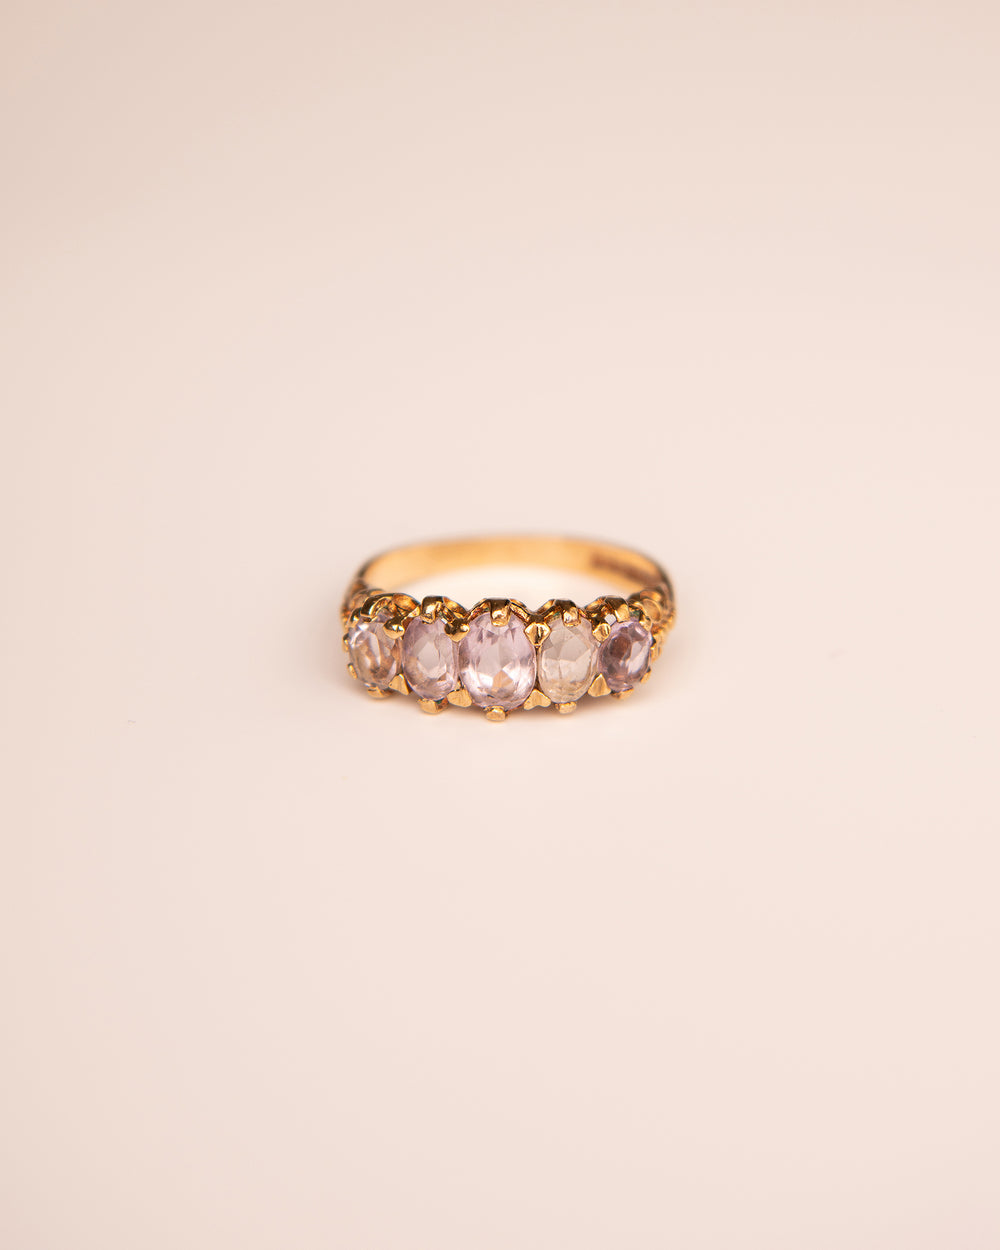 Fearn 9ct Gold Vintage Kunzite Ring